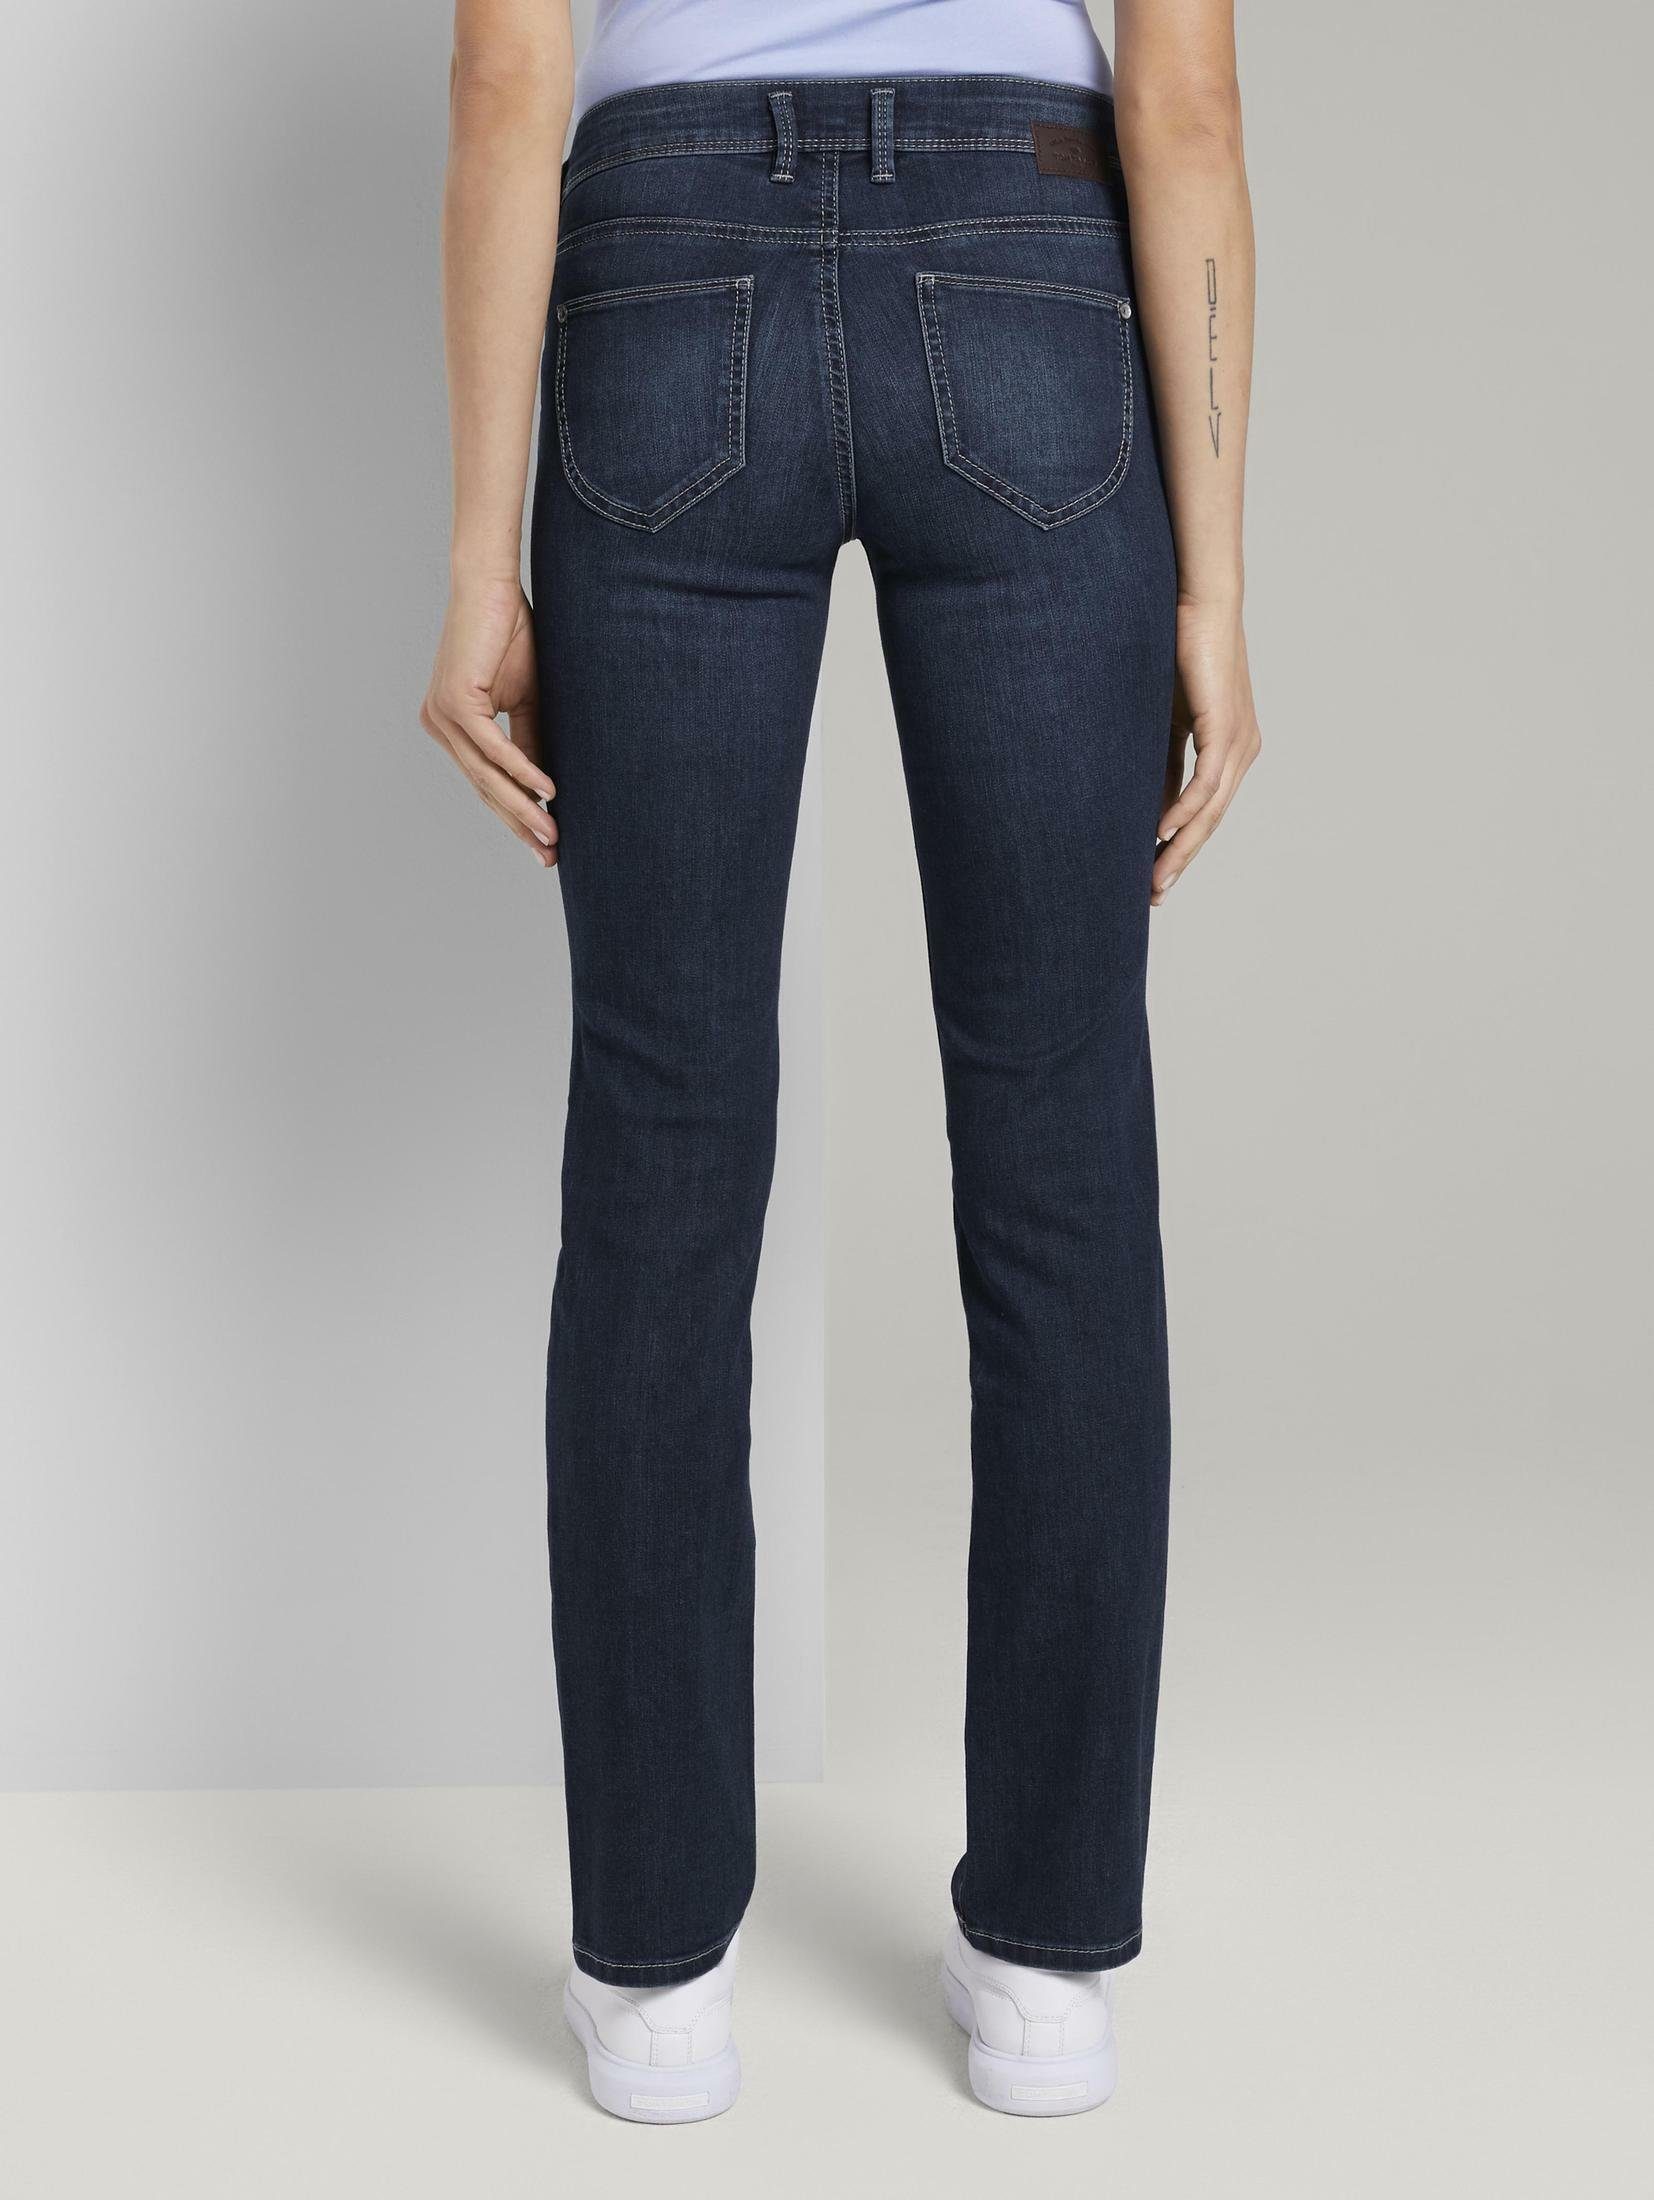 Jeans Straight Alexa TAILOR Skinny-fit-Jeans wash Bio-Baumwolle denim dark TOM mit stone